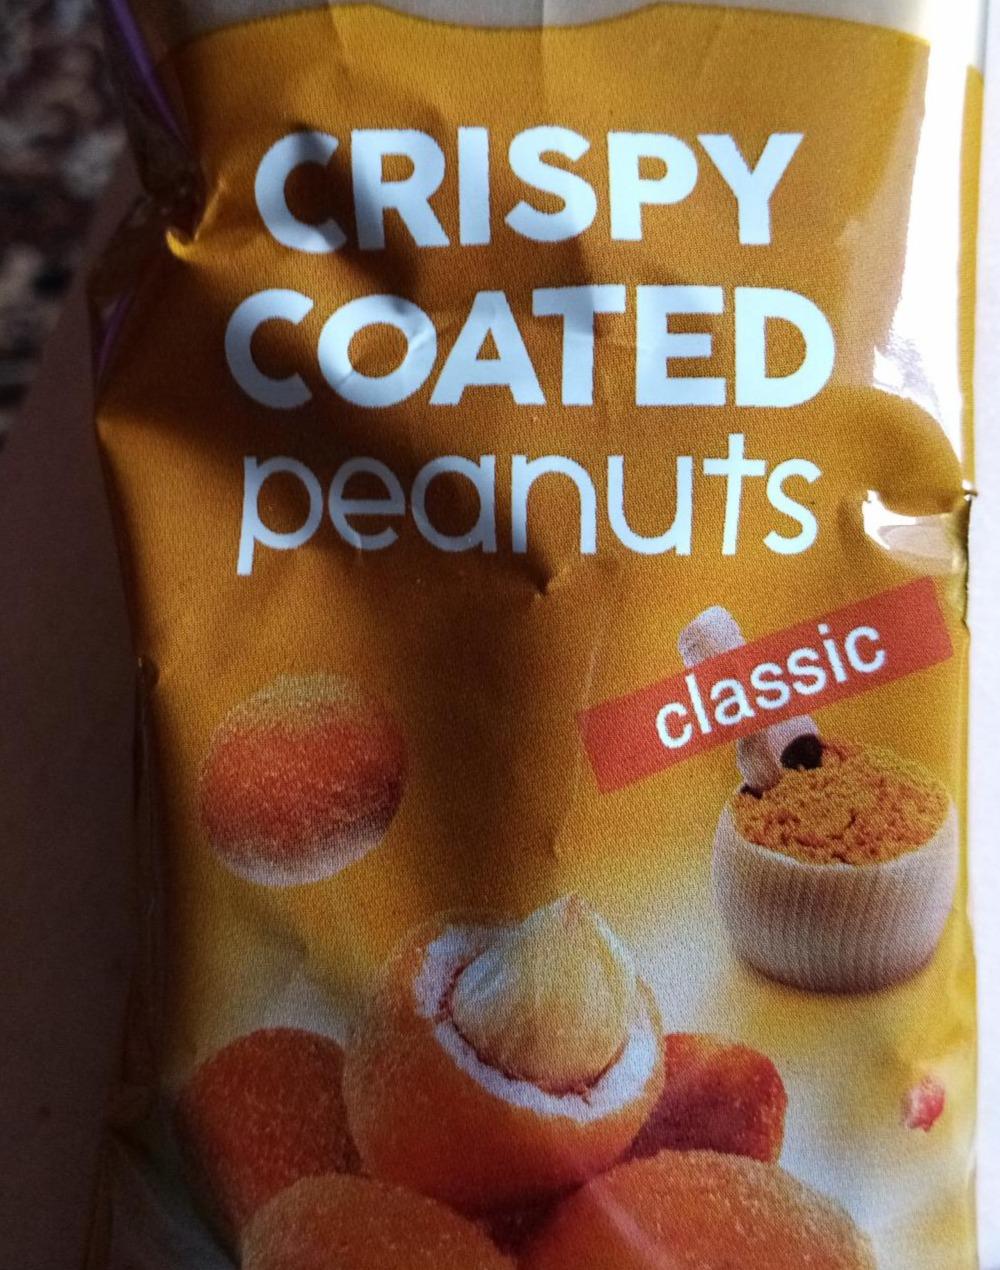 Fotografie - Crispy coated peanuts classic